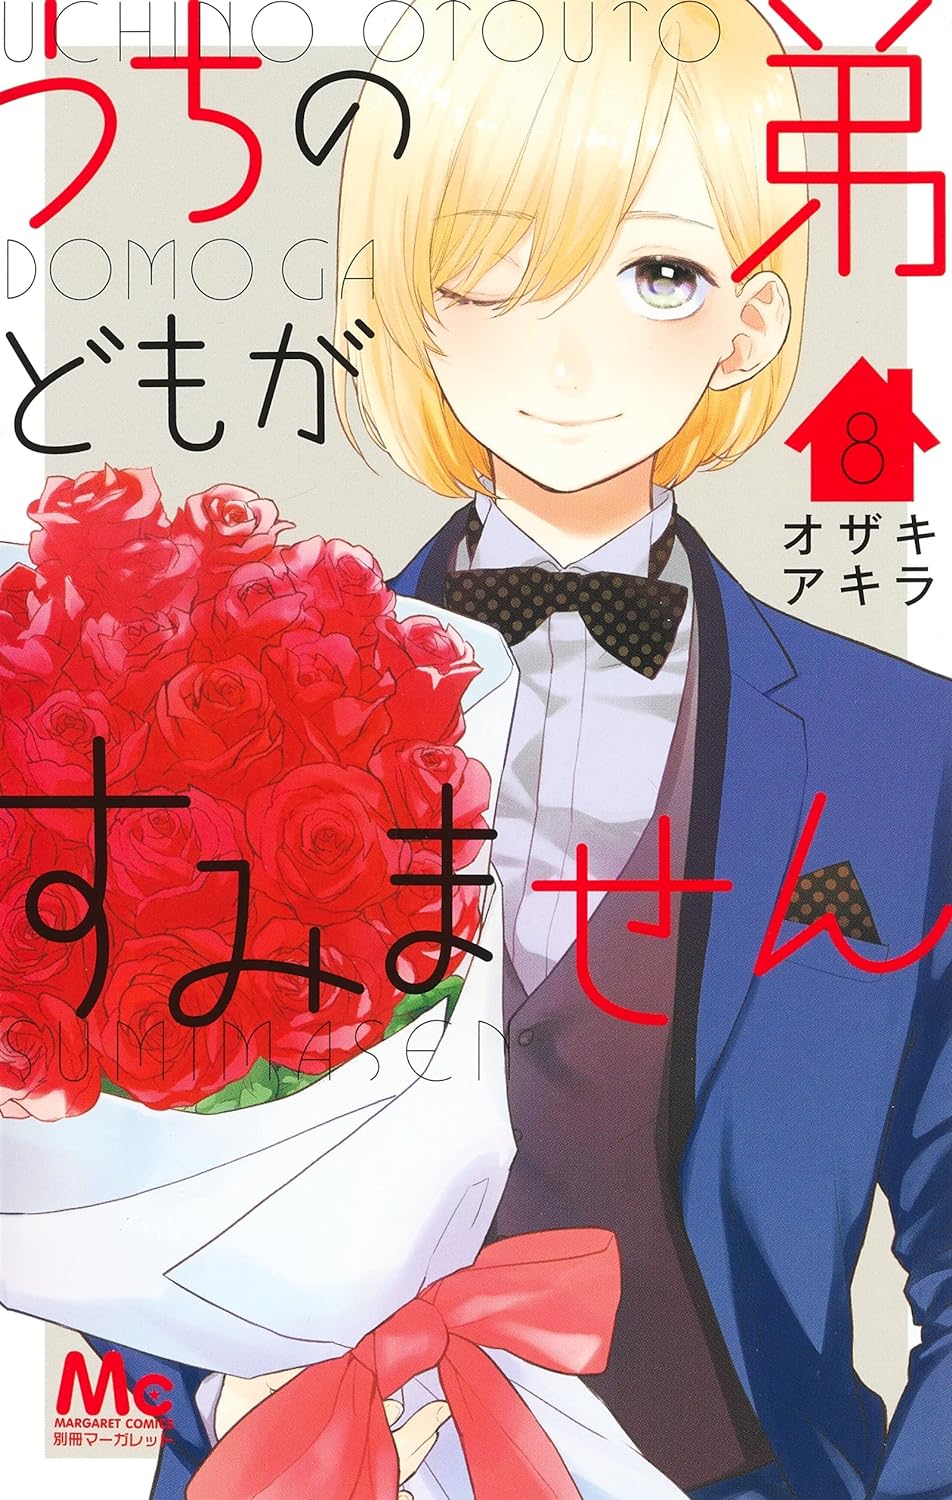 AoButa out of context, manga edition- volume 3, part two : r/ SeishunButaYarou